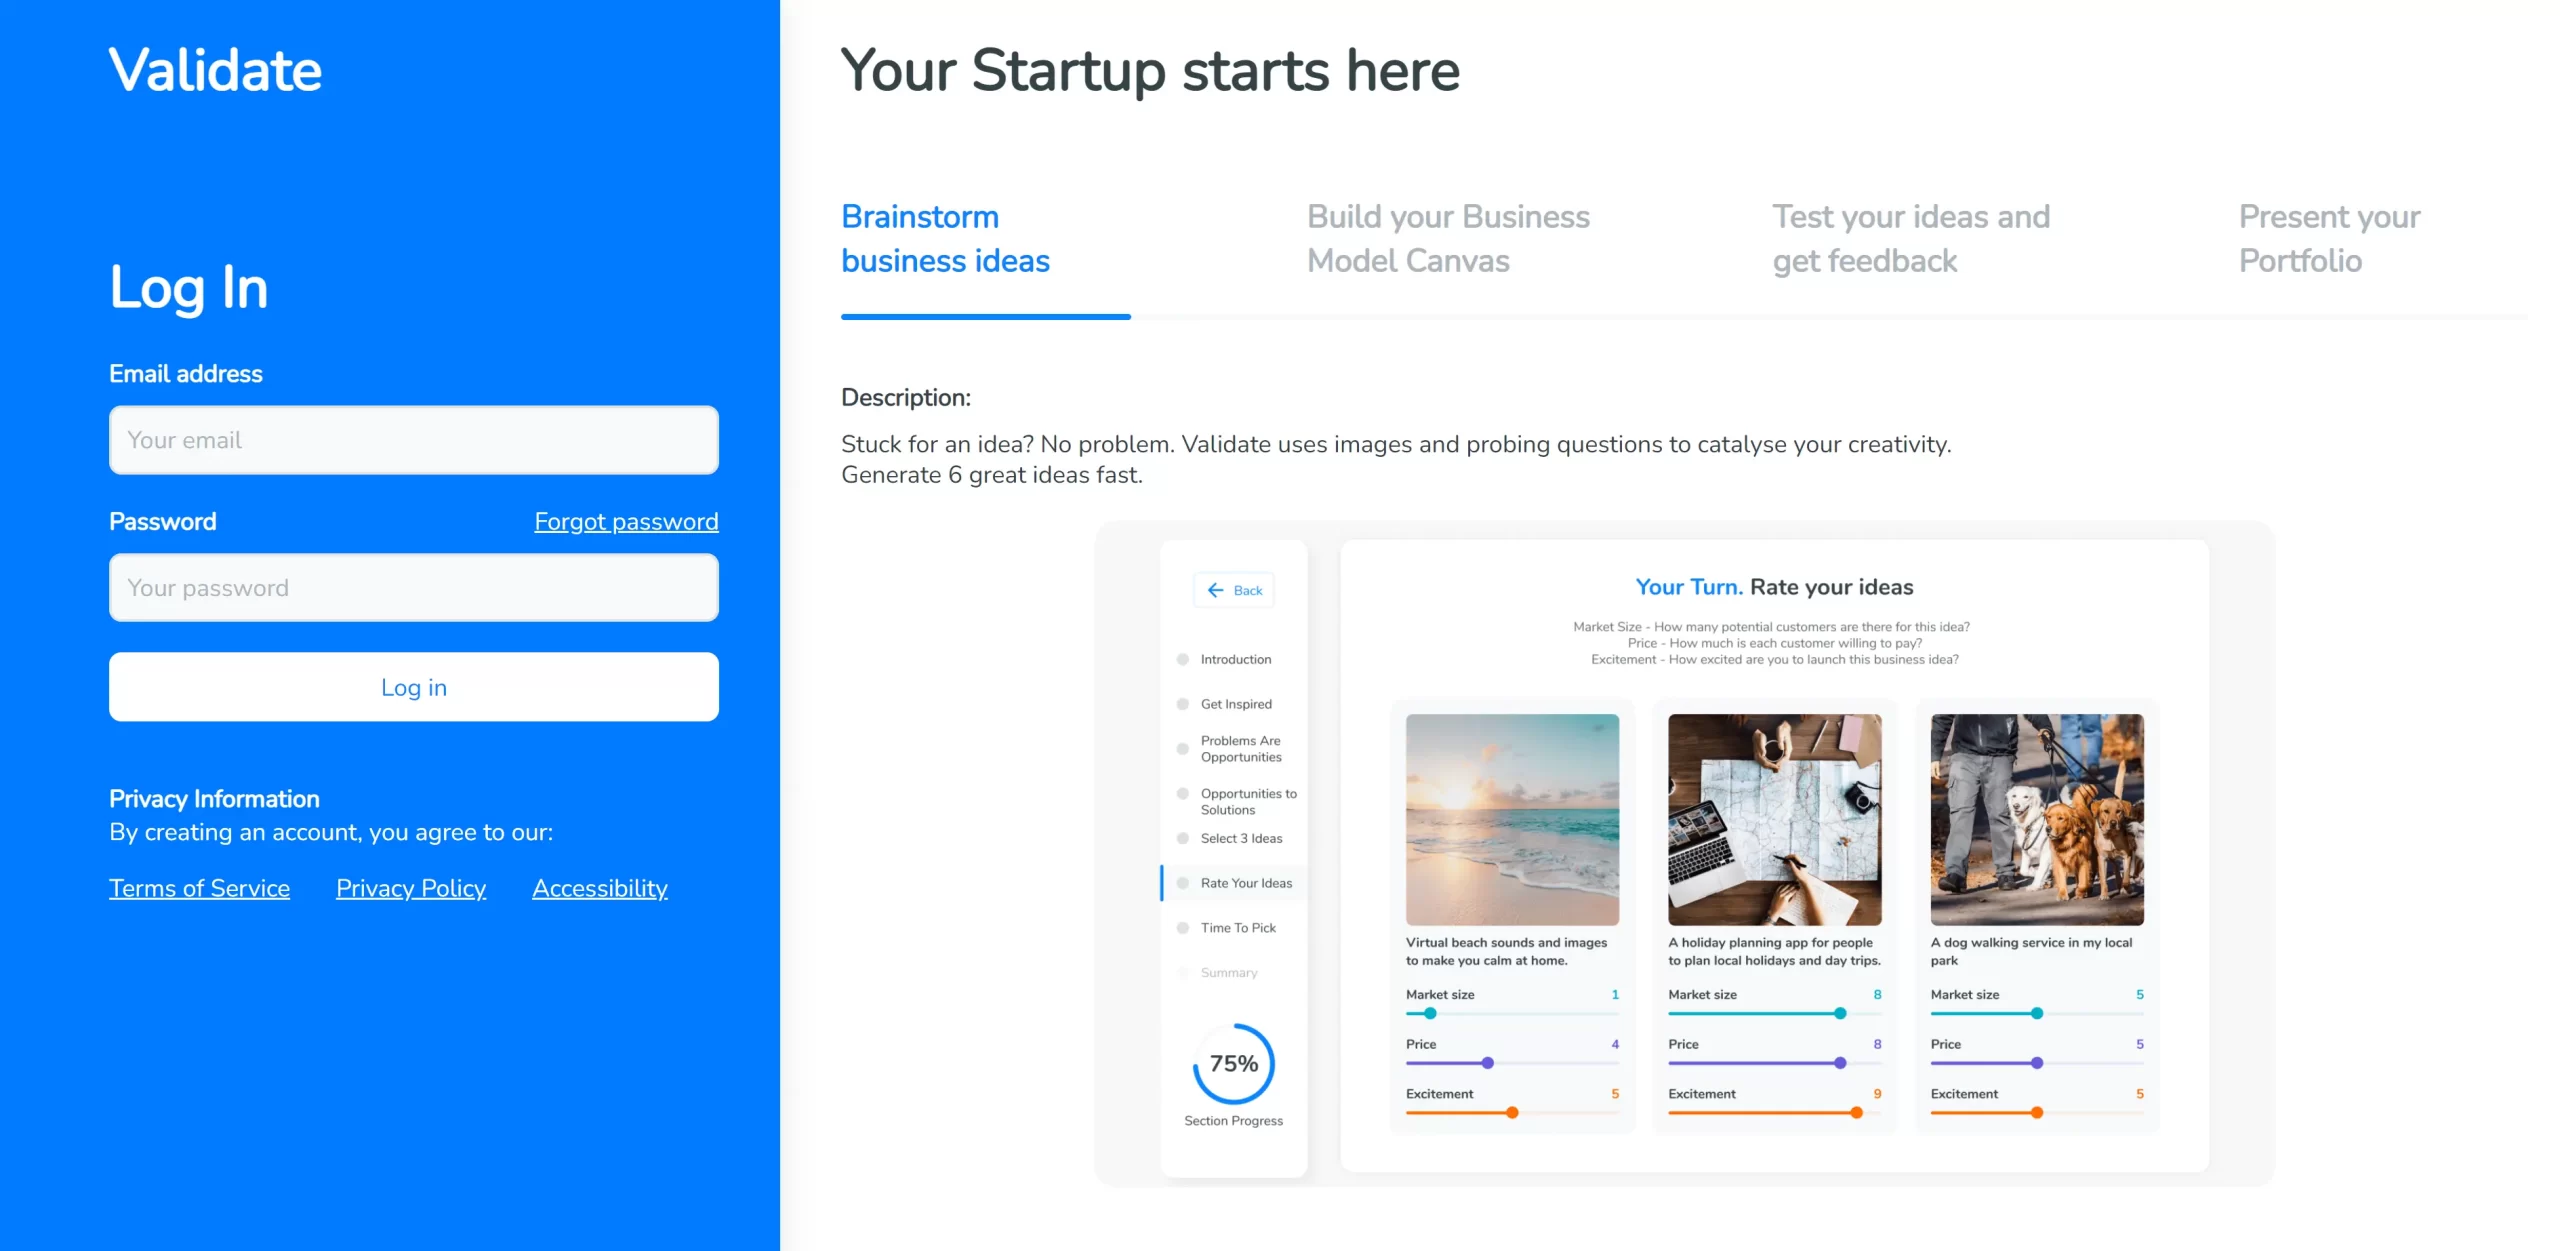 Login to SimVenture Validate to start developing your startup idea.